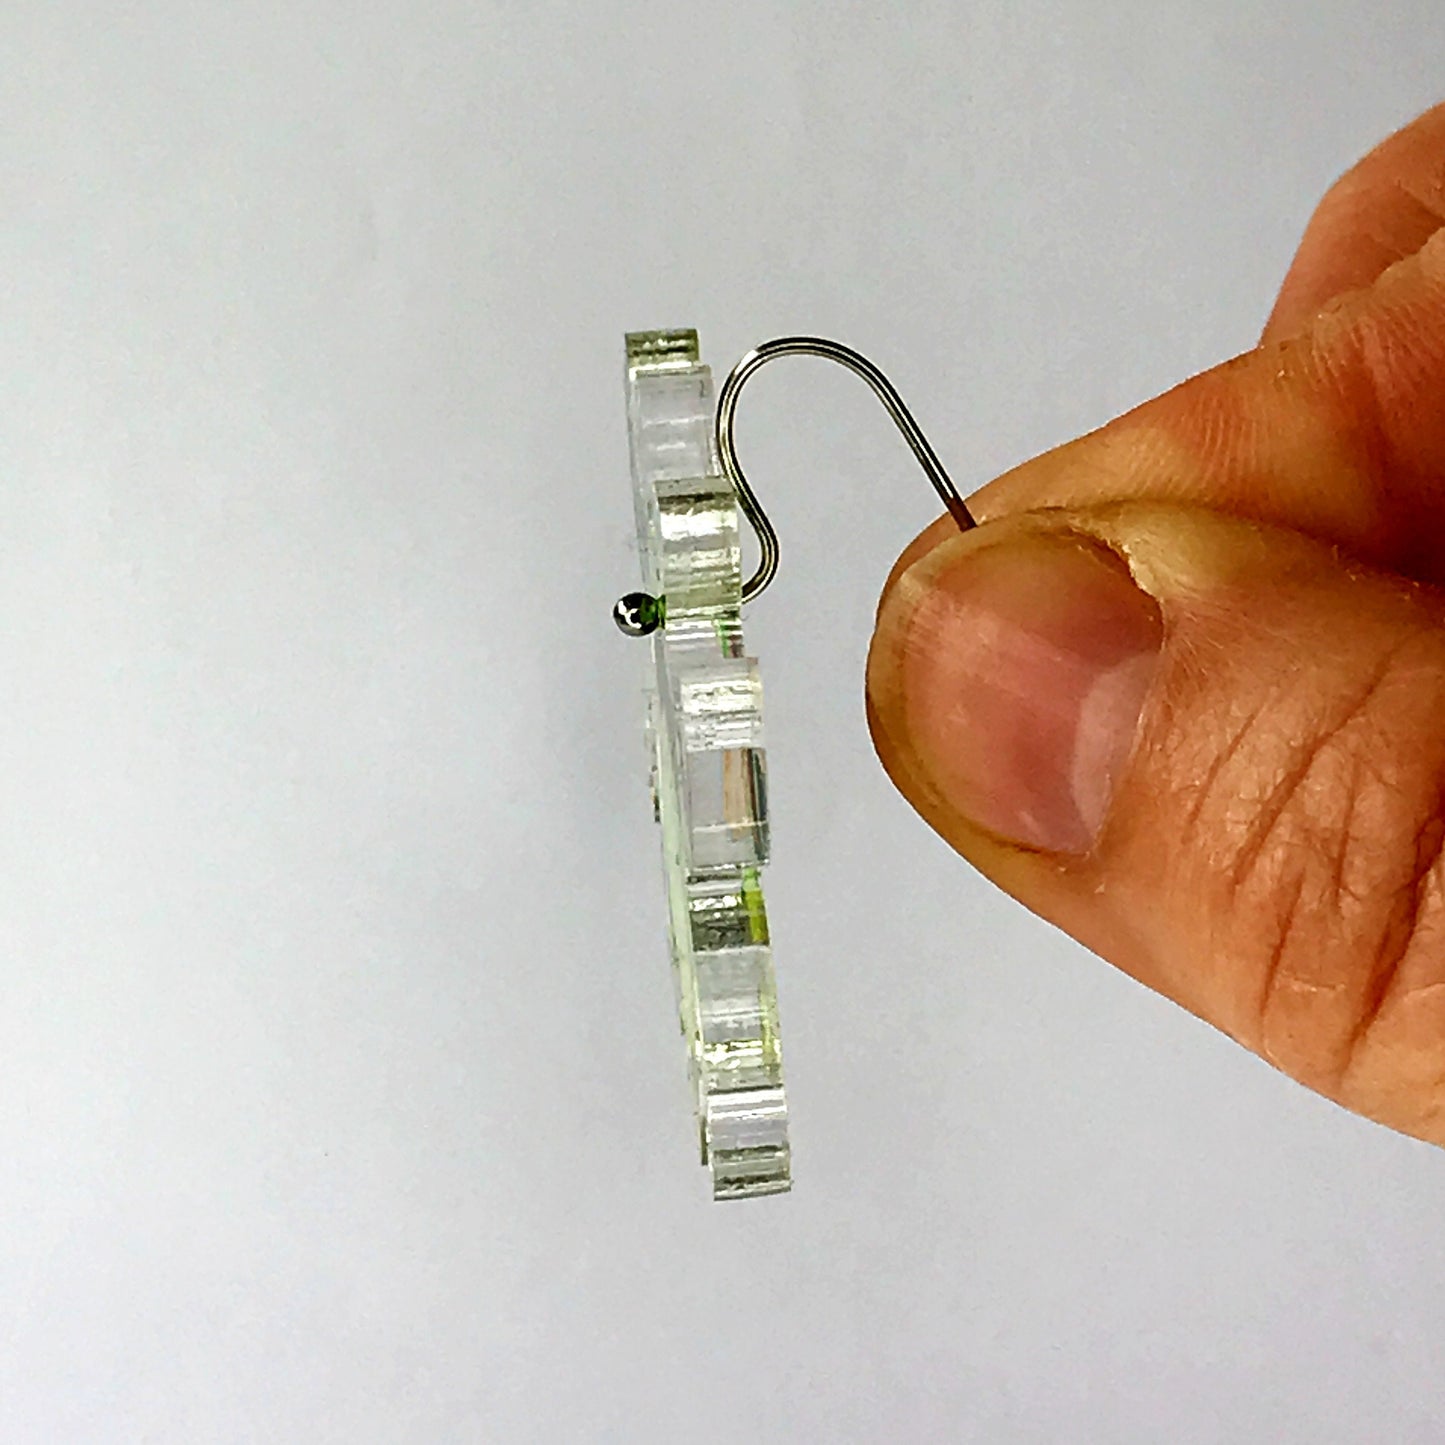 Halloween green monster earrings - 100% recycled acrylic